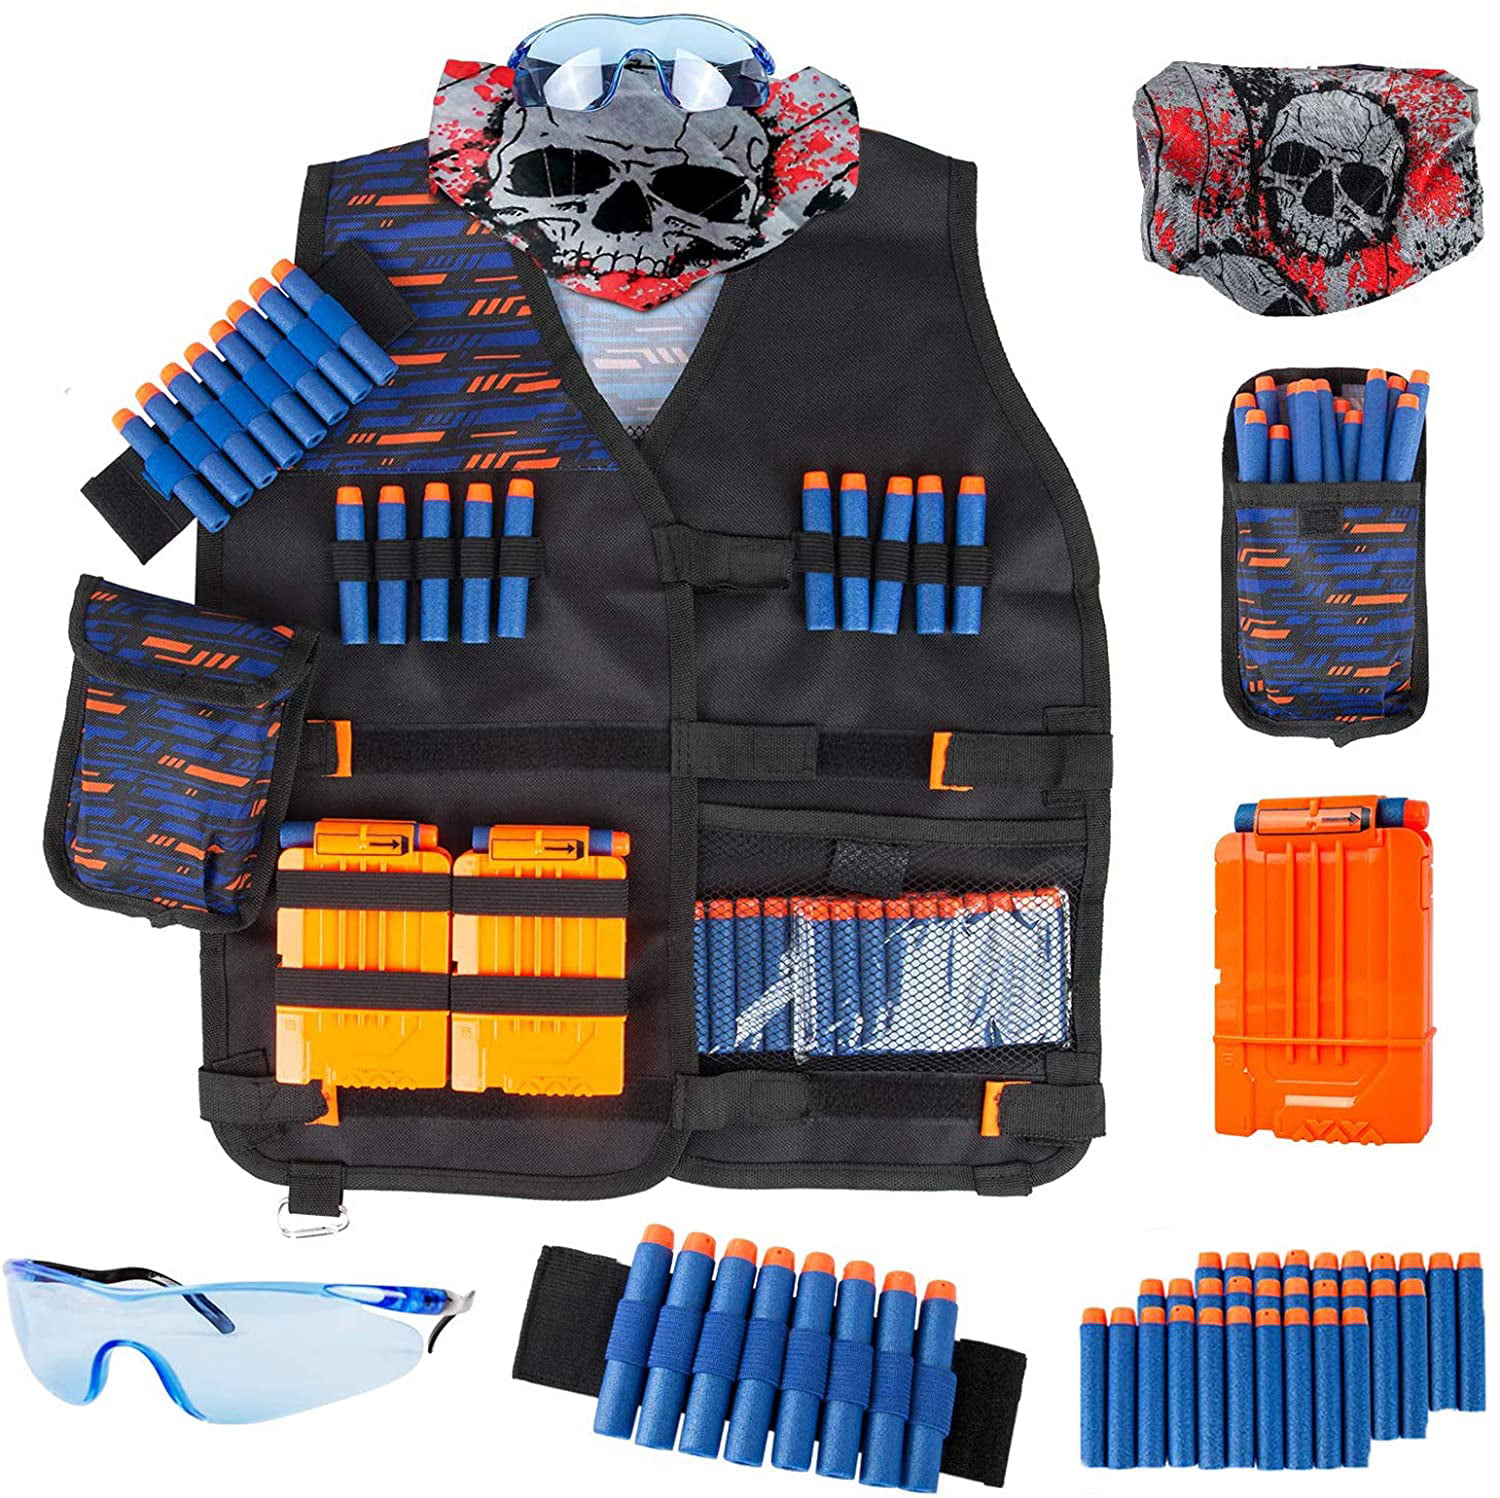 Nerf Gun Soft Bullets Target Set Boys Gift Ideas Toy Dart Blasters Foam Refills